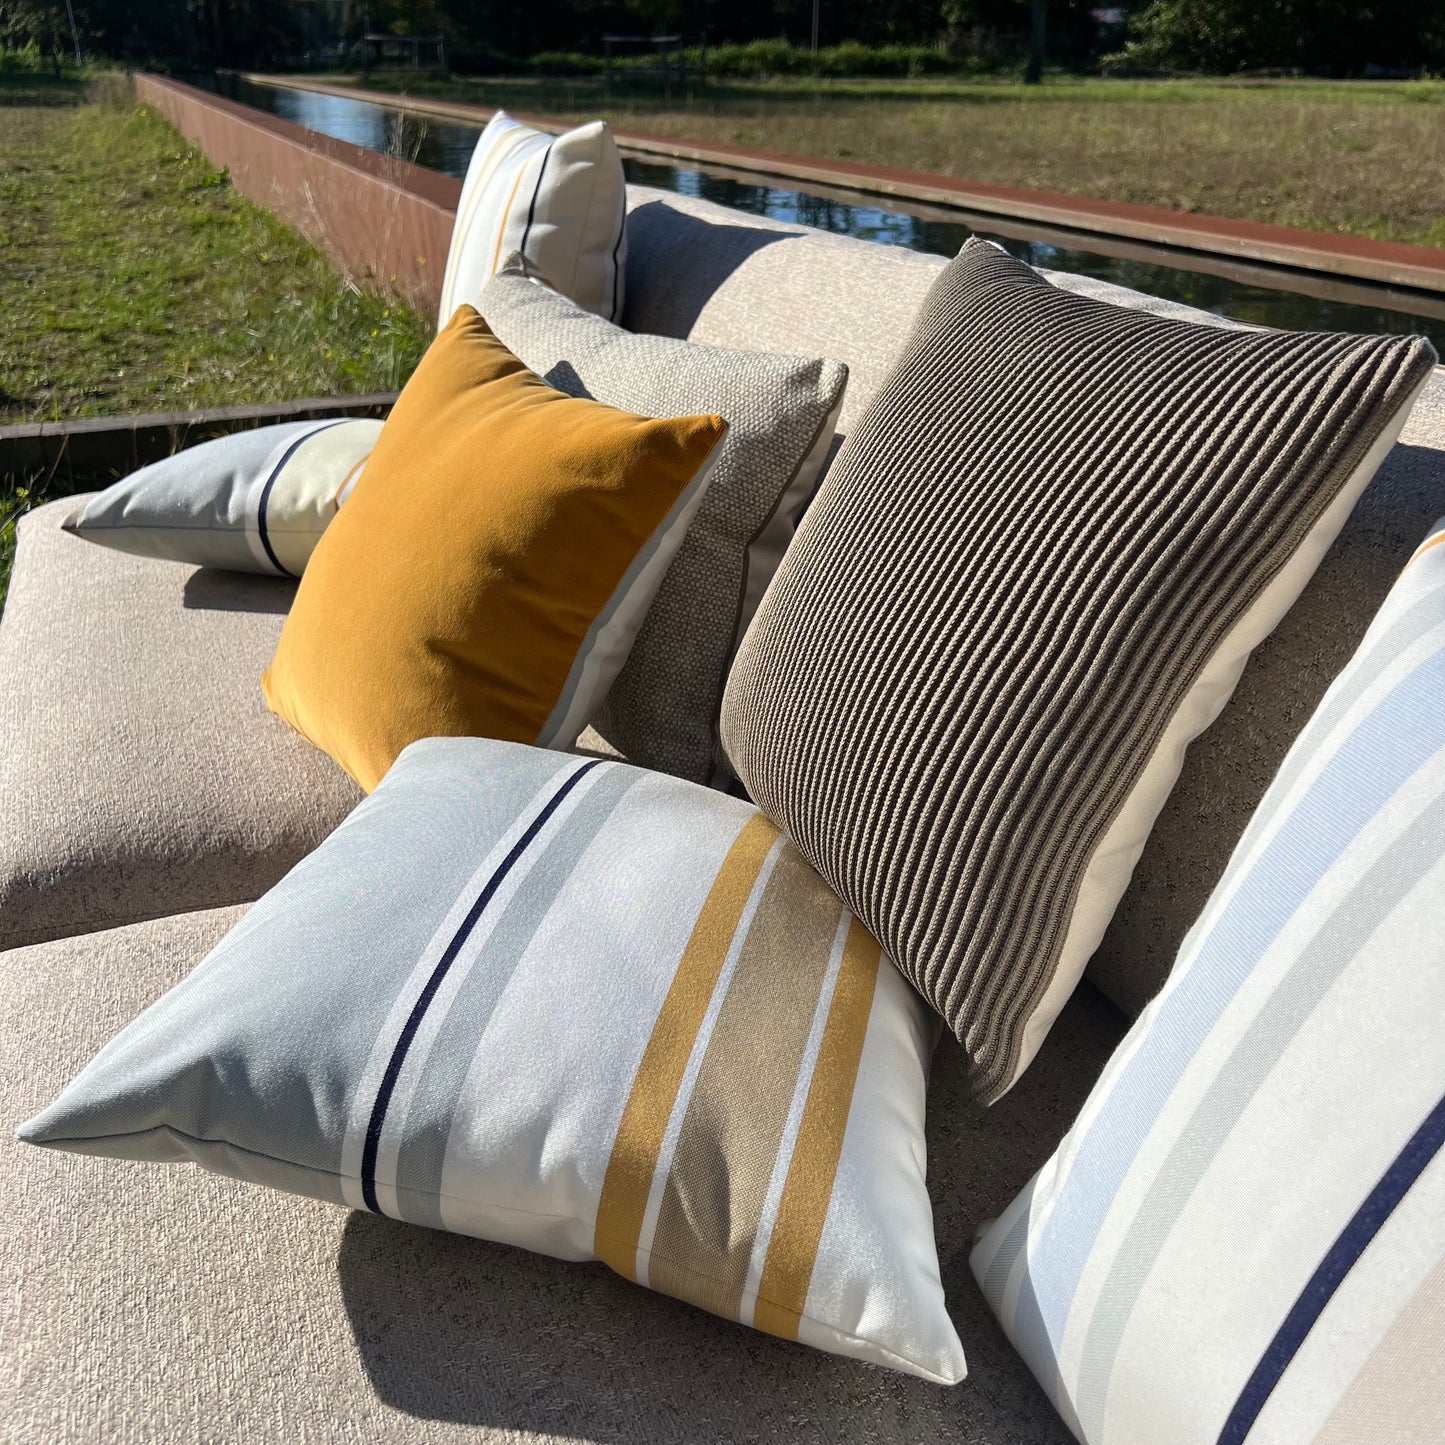 Versatile cushion Trianon jacquard fabric